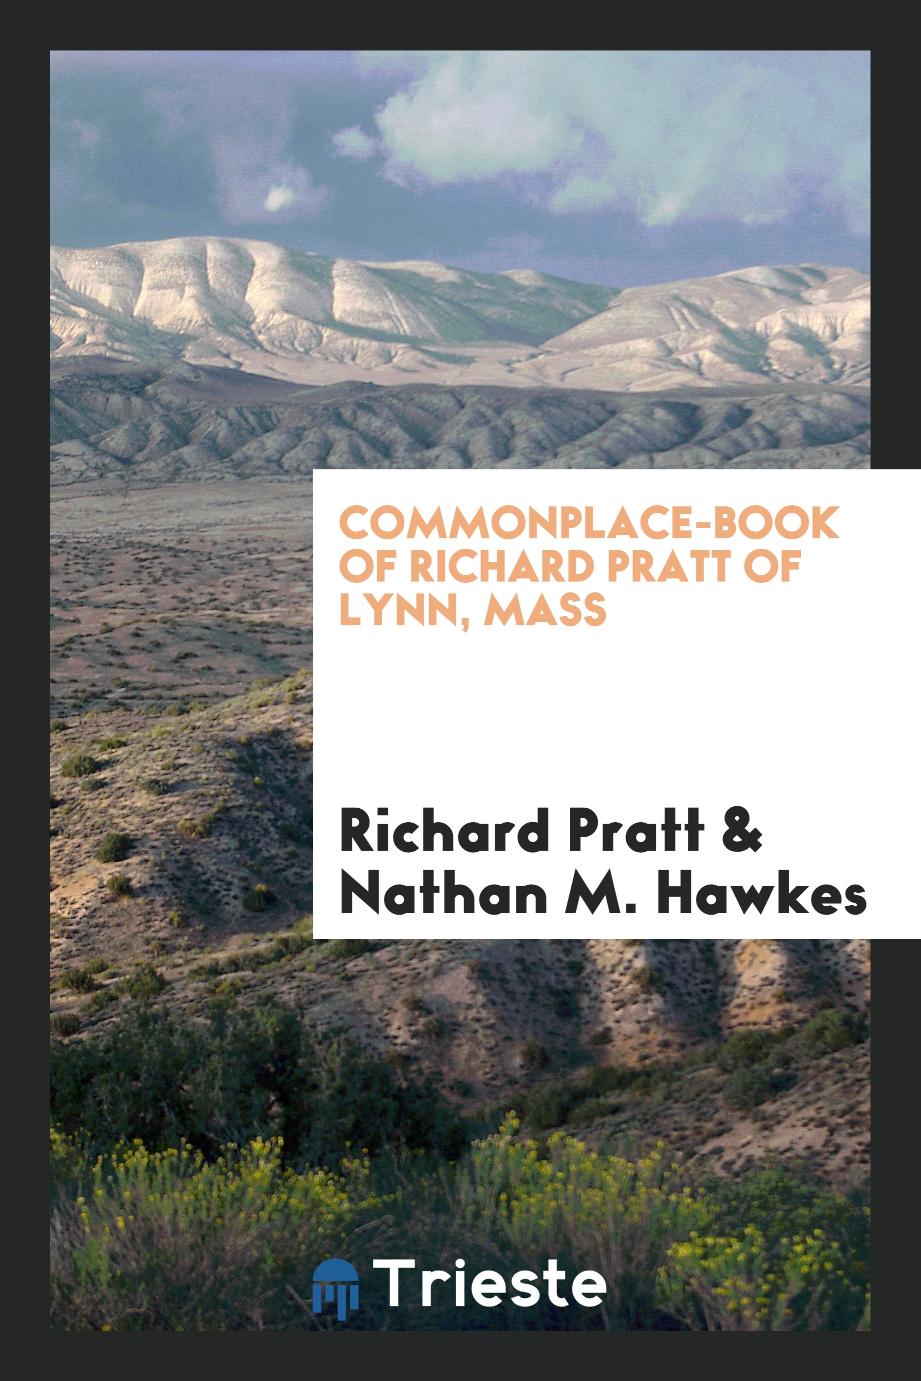 Commonplace-book of Richard Pratt of Lynn, Mass